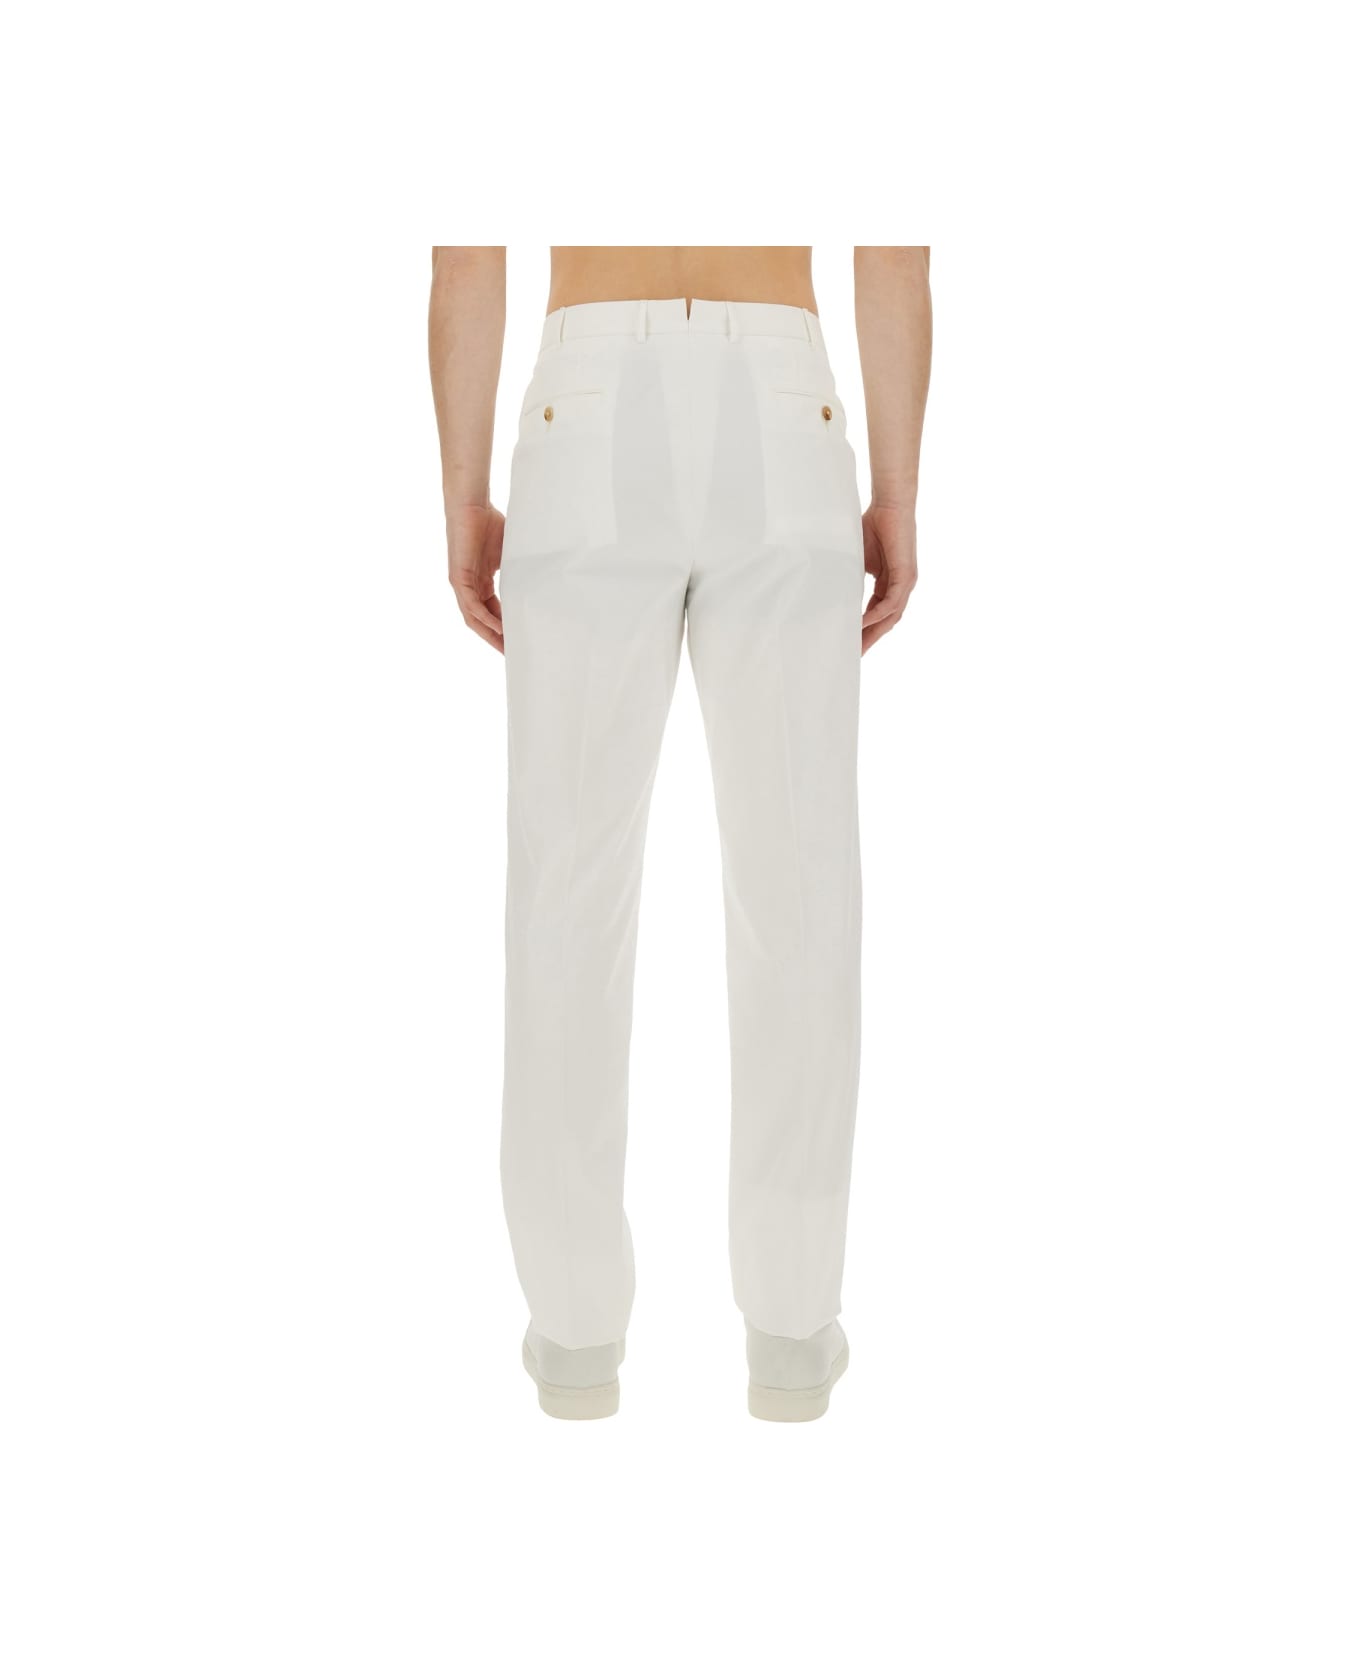 Zegna Cotton Pants - WHITE